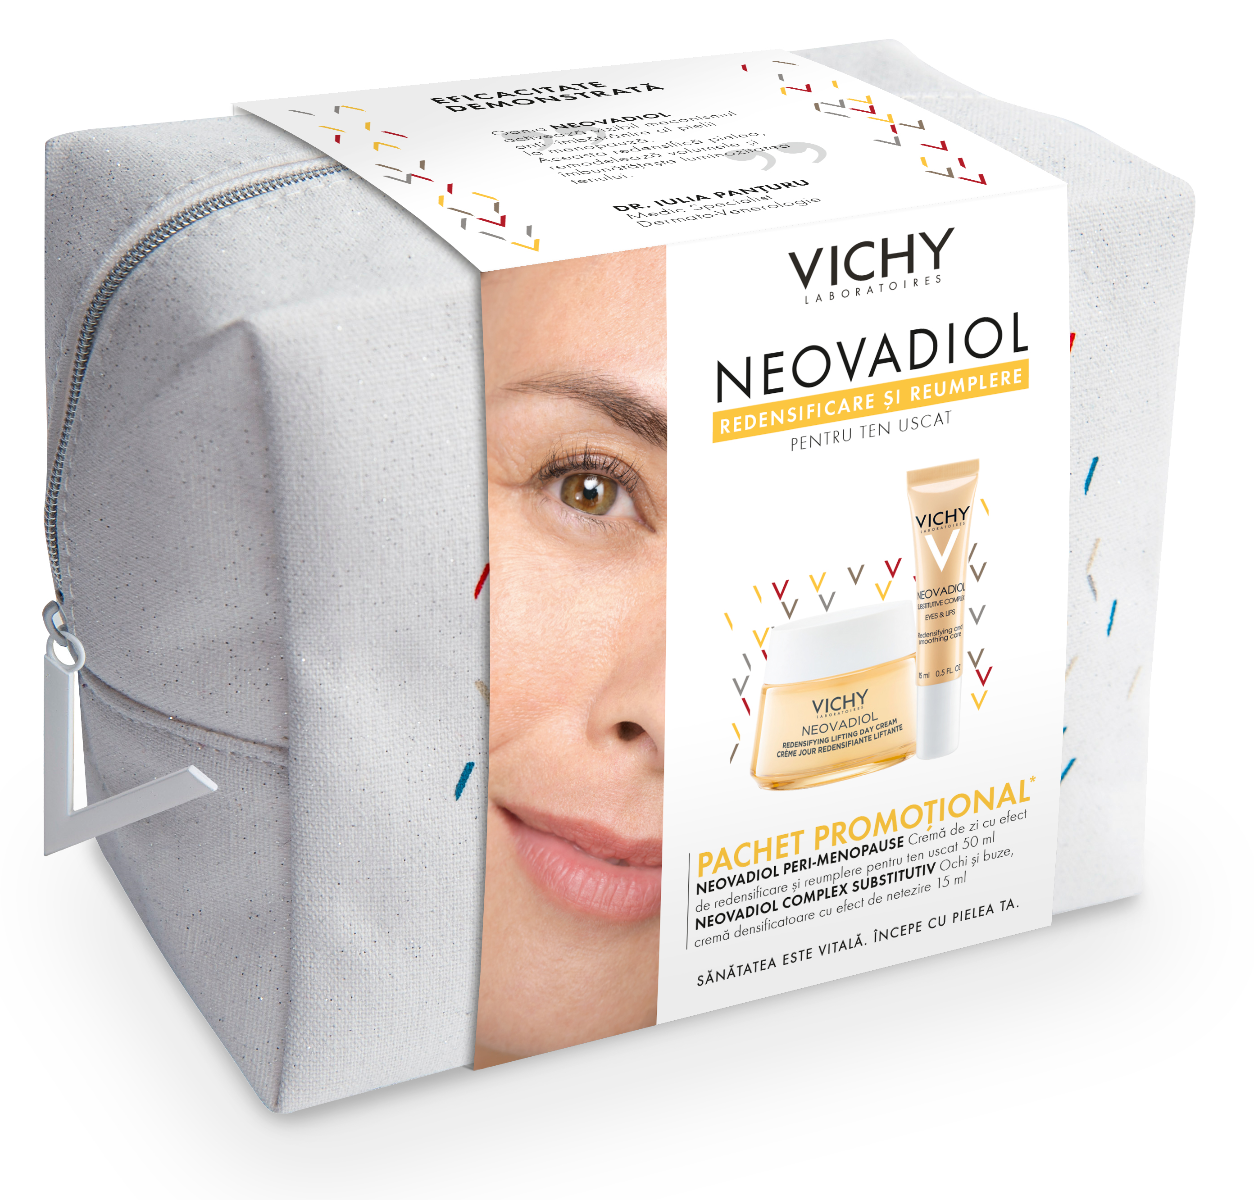 Pachet Promotional Neovadiol Peri-Menopauza pentru ten uscat 50ml + Crema contur ochi si buze Neovadiol 15ml, Vichy